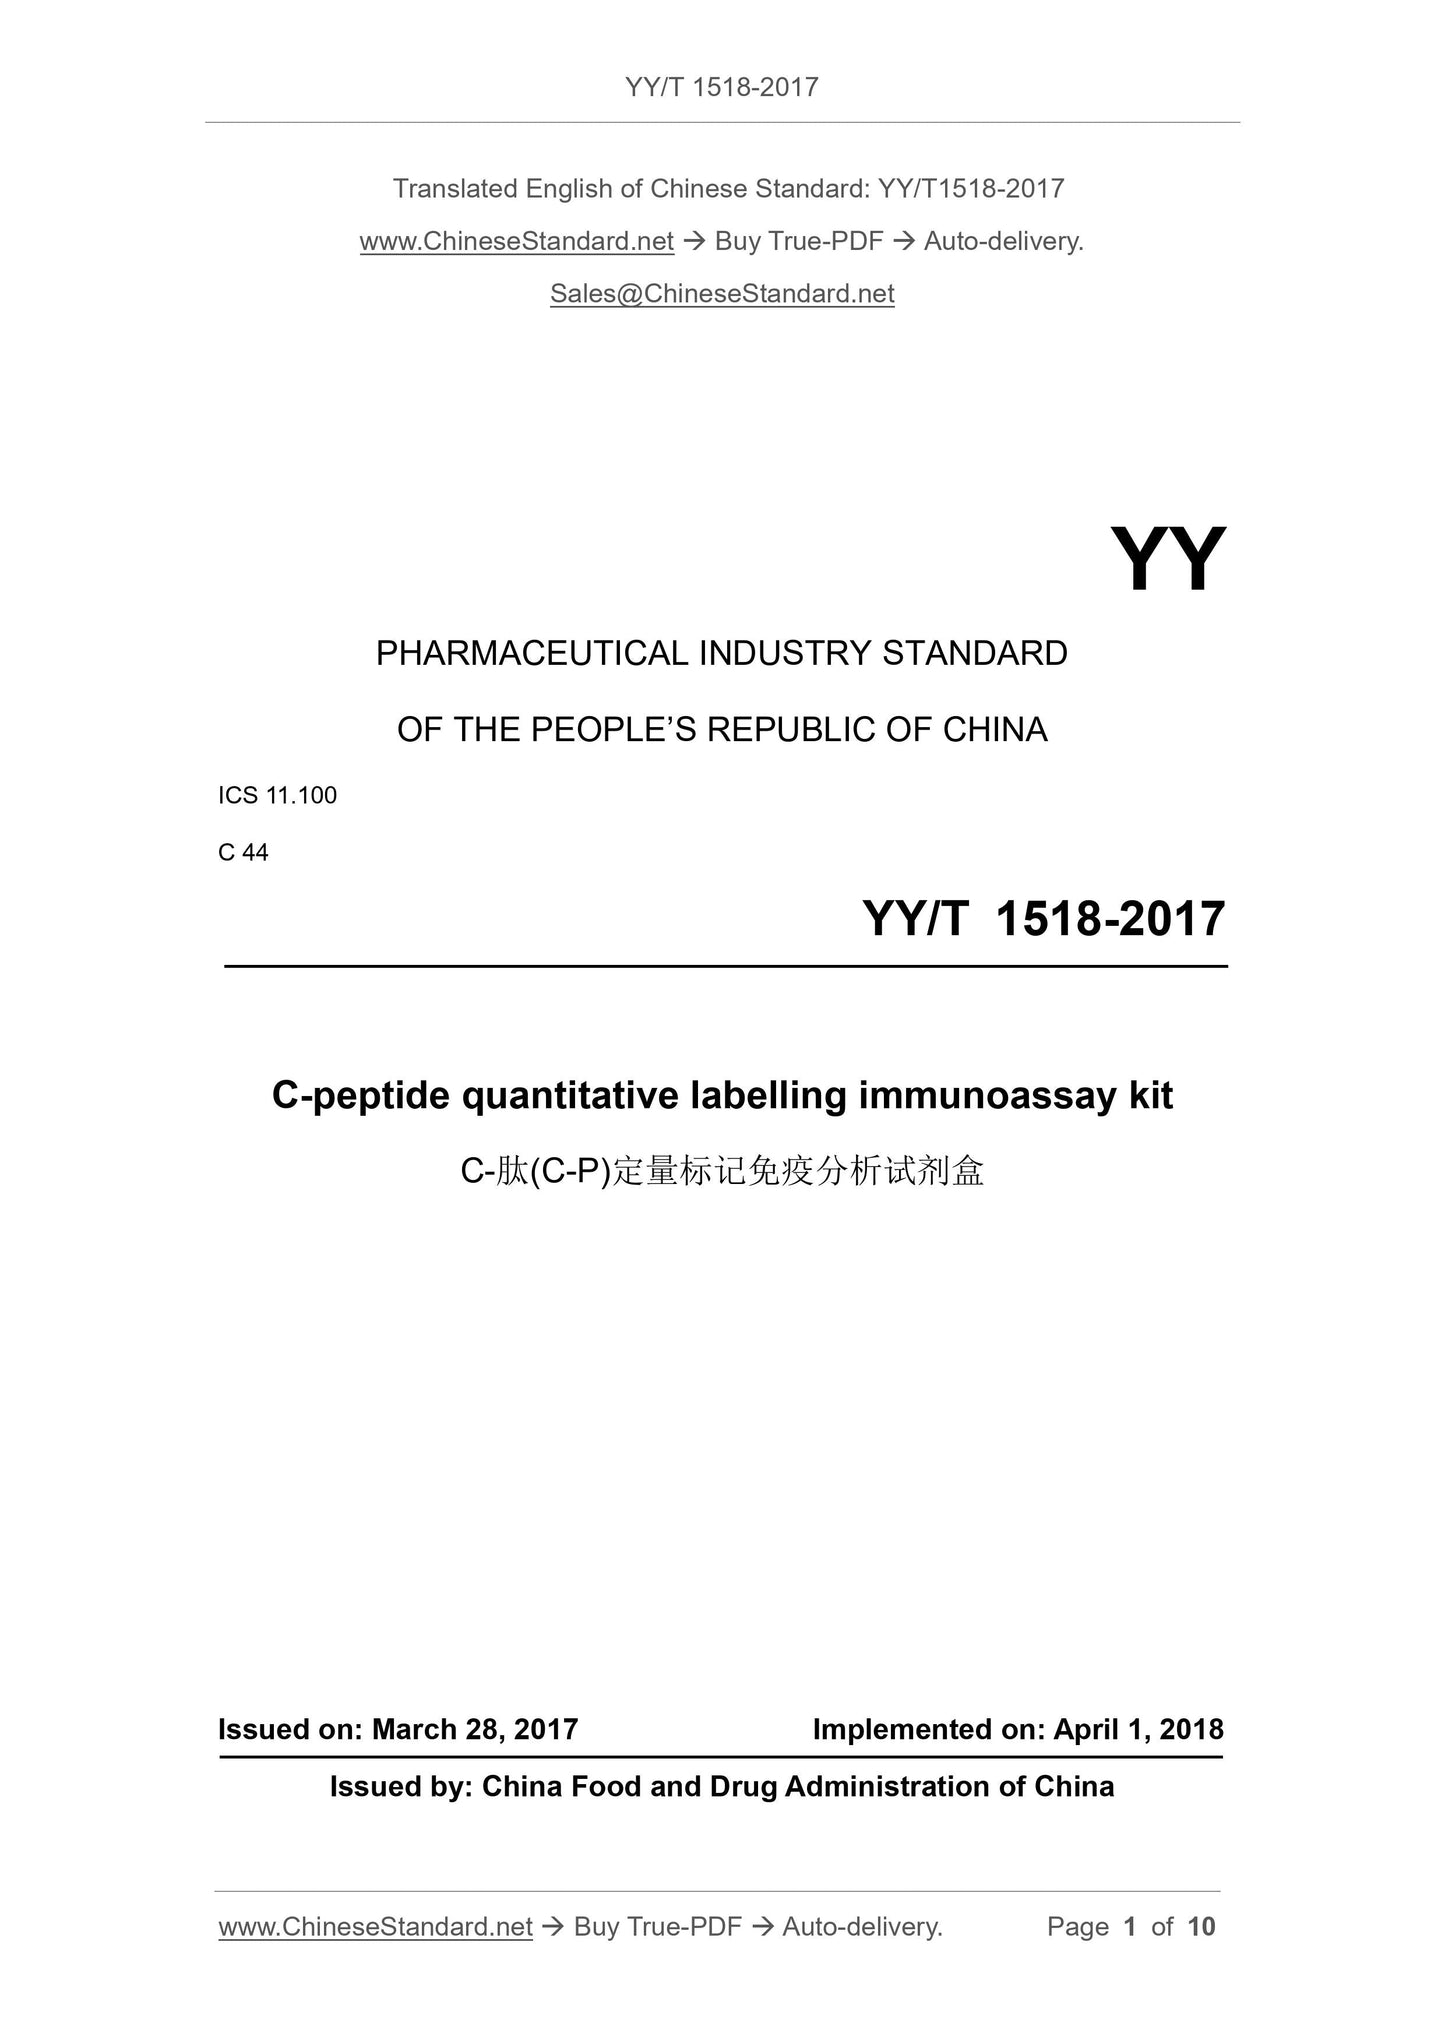 YY/T 1518-2017 Page 1